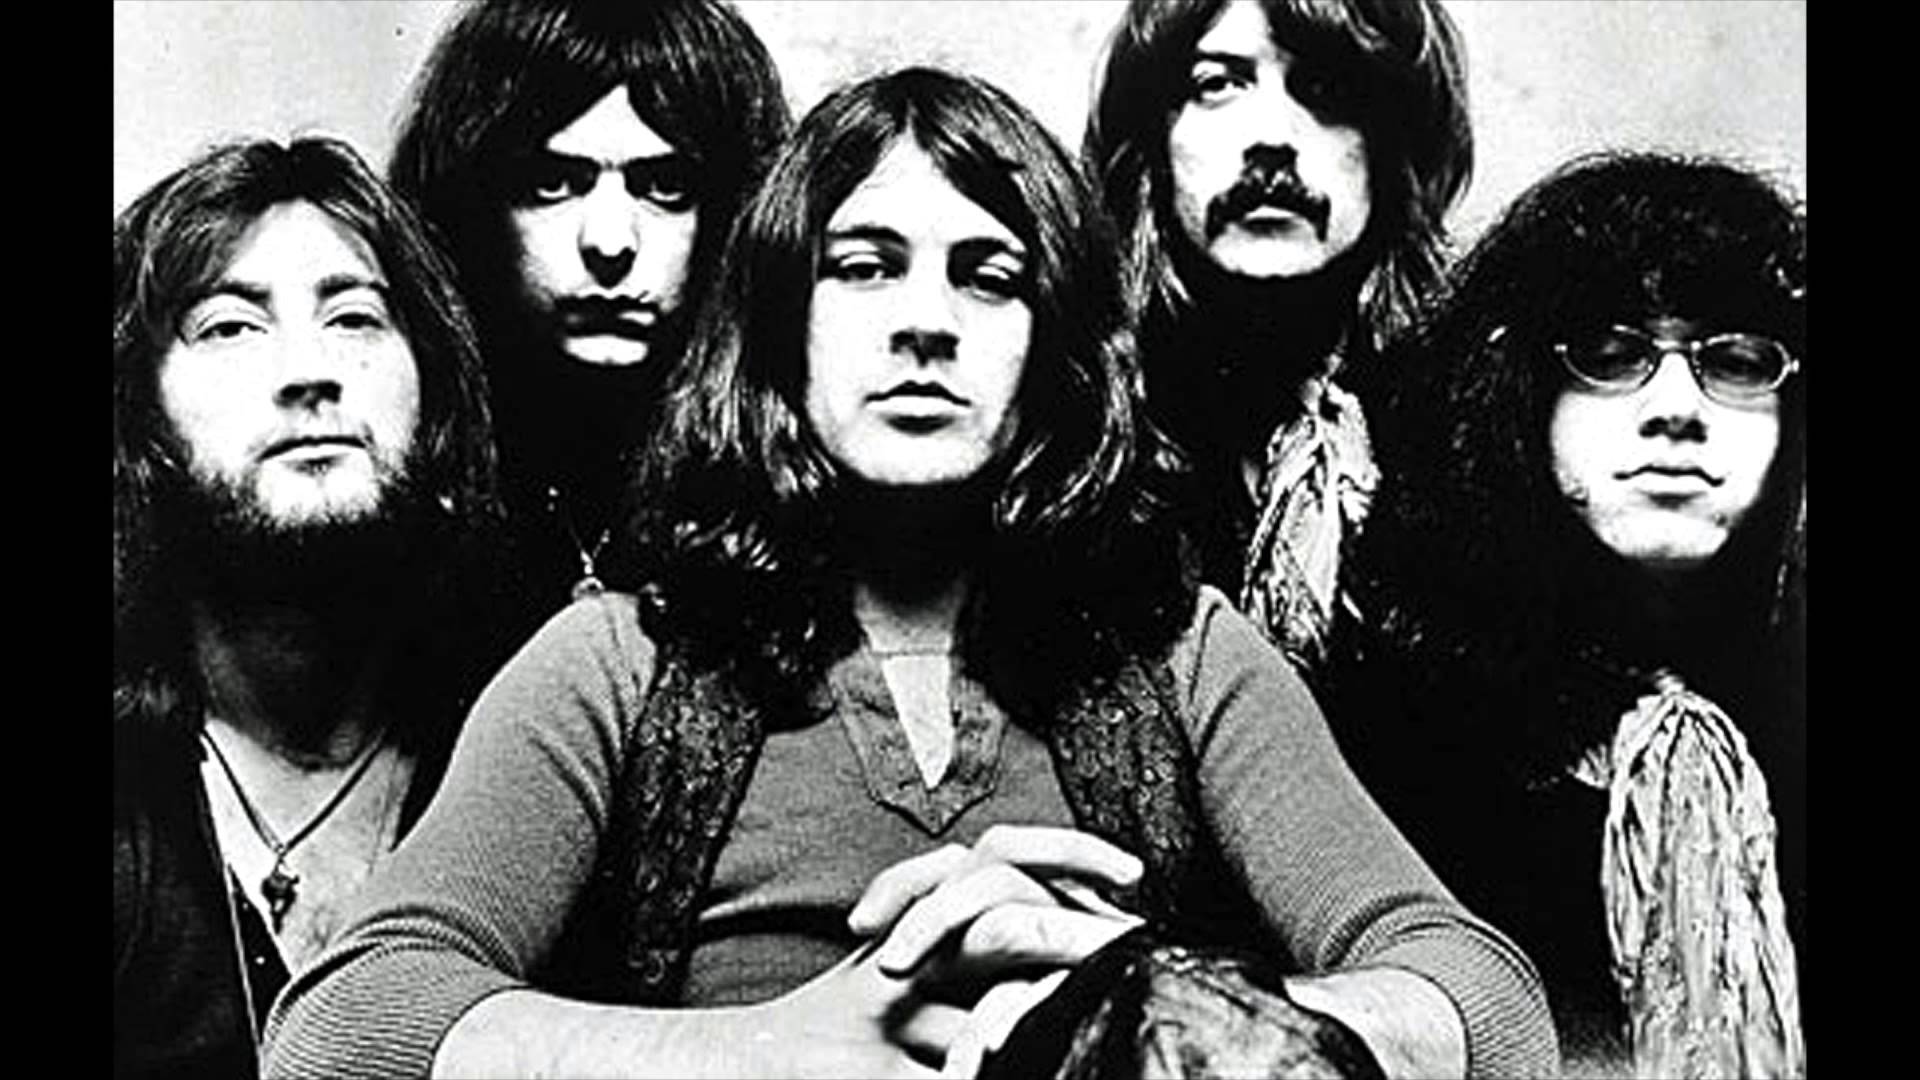 Deep Purple HD wallpapers, Desktop wallpaper - most viewed